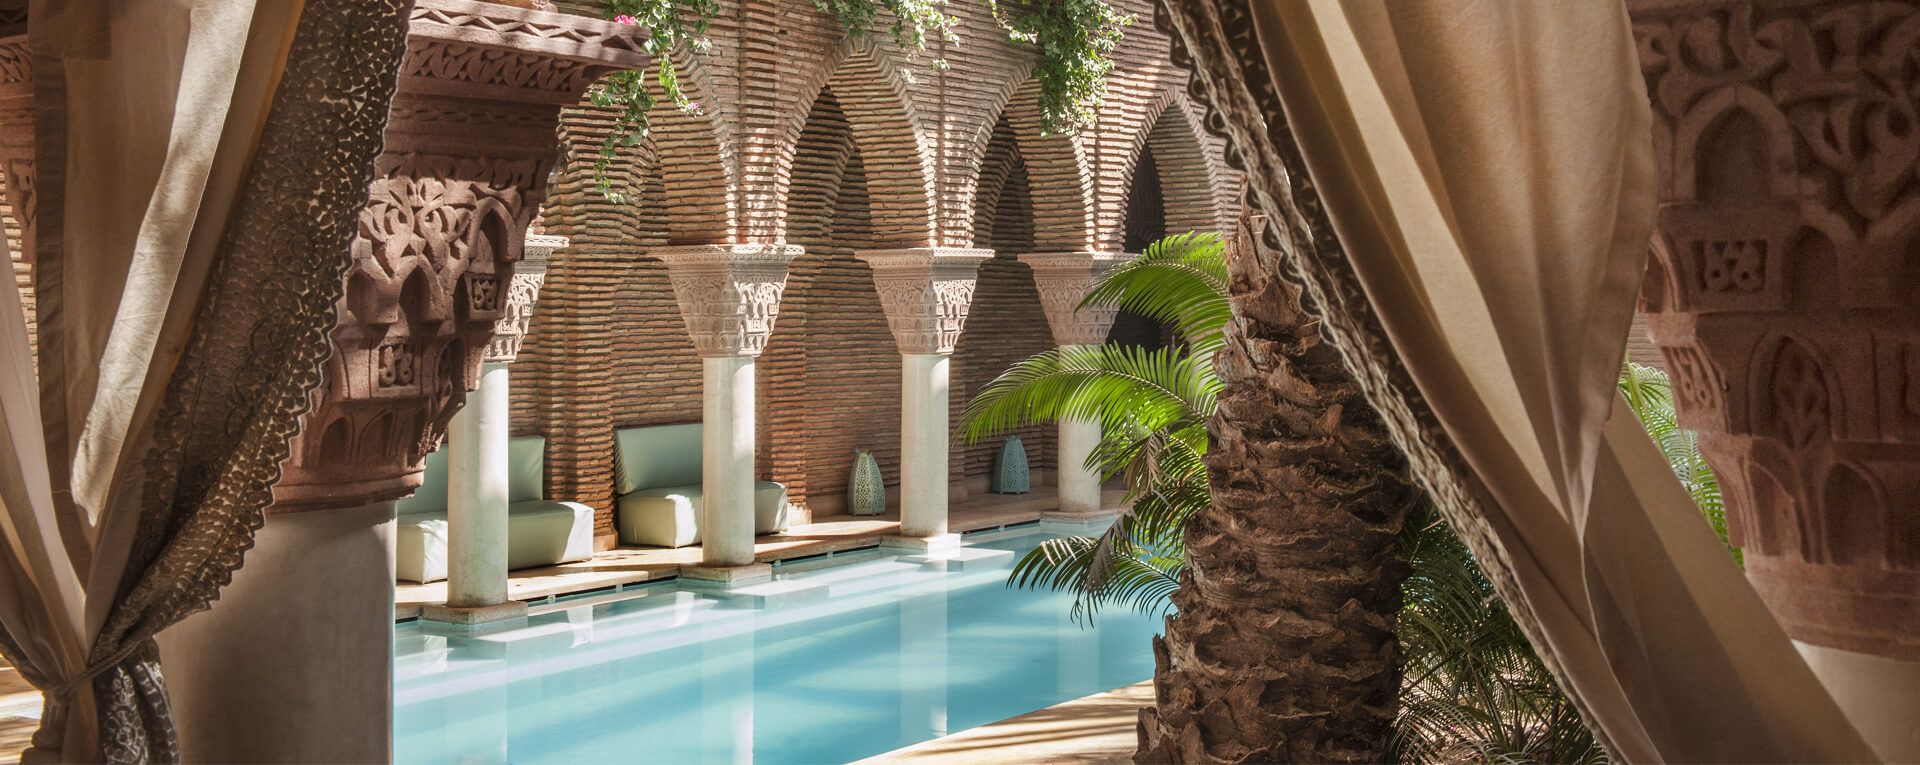 La Sultana, Marrakech